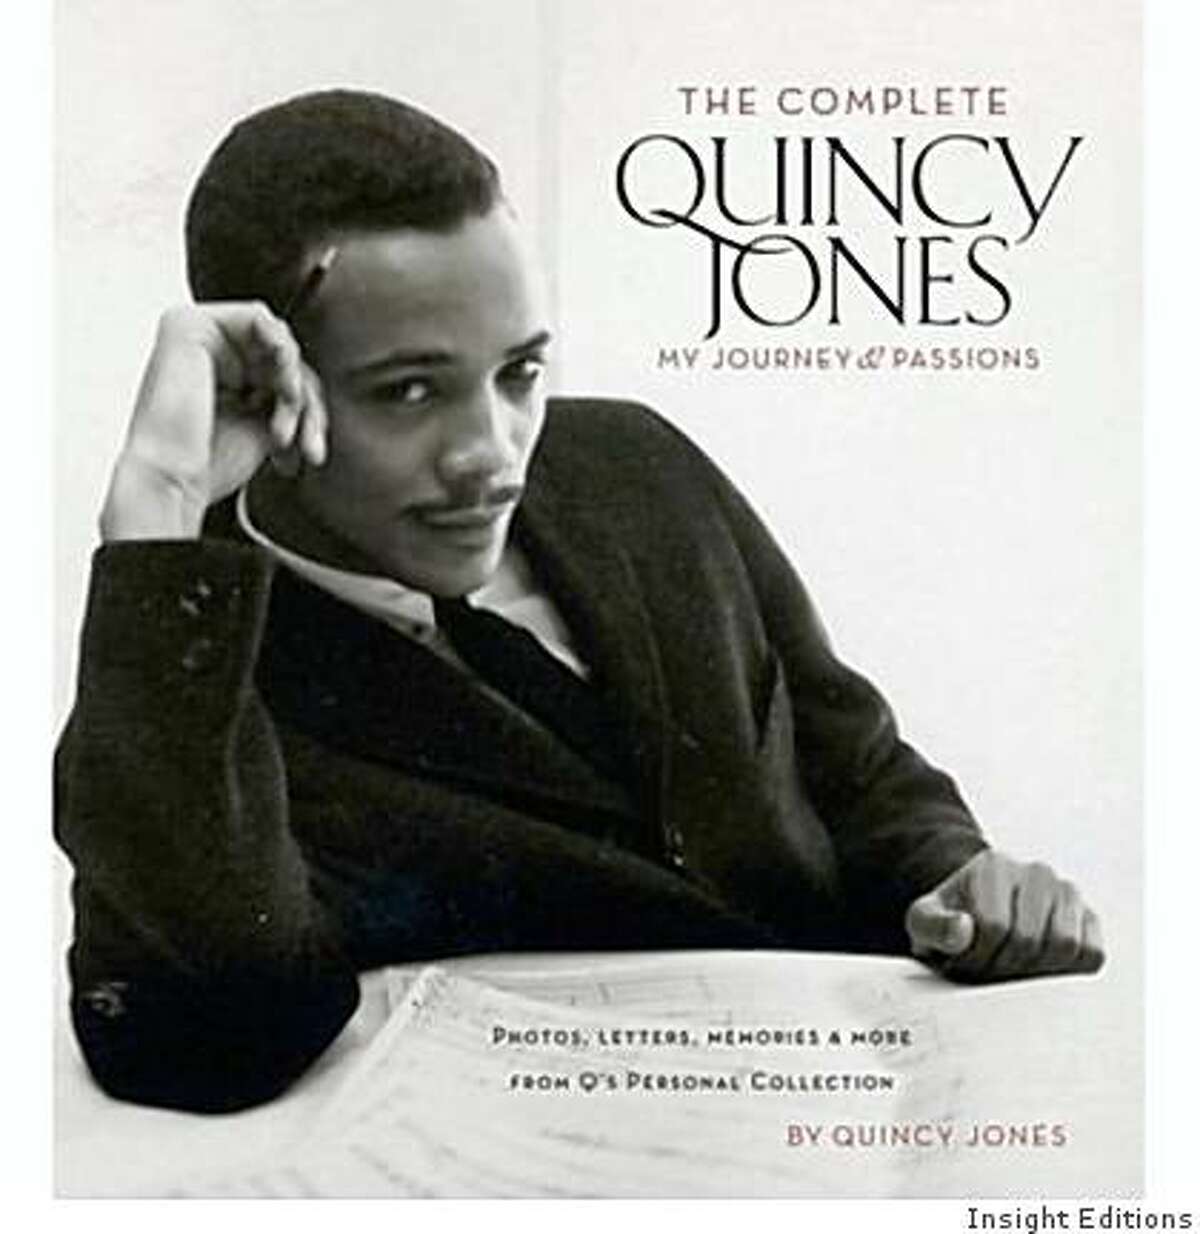 Quincy Jones has written an autobiography,"The Complete quincy Jones: My Journey and Passions."